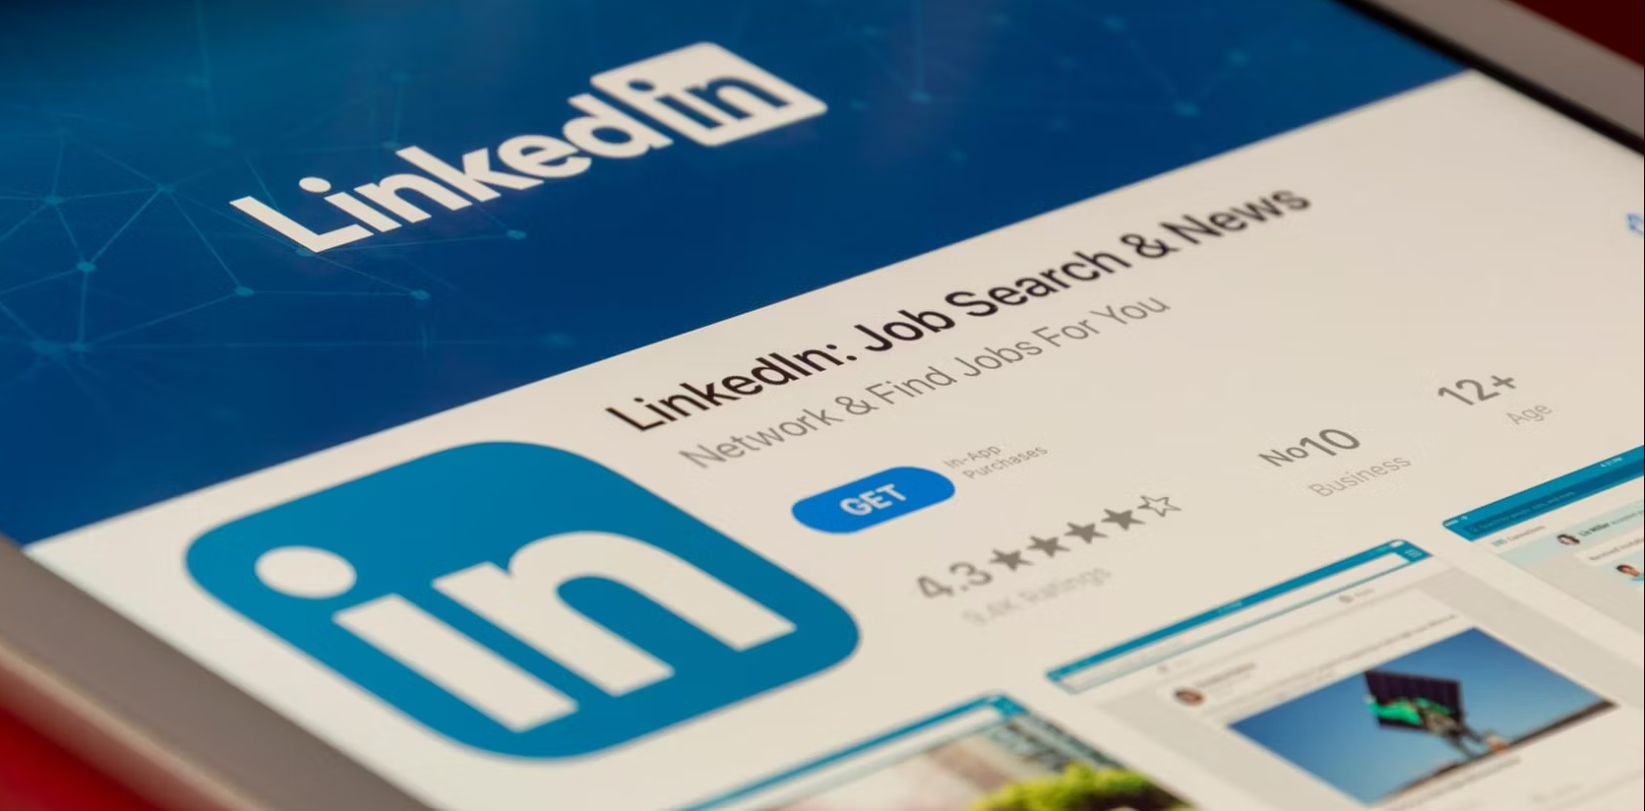 How to Identify fake jobs on LinkedIn